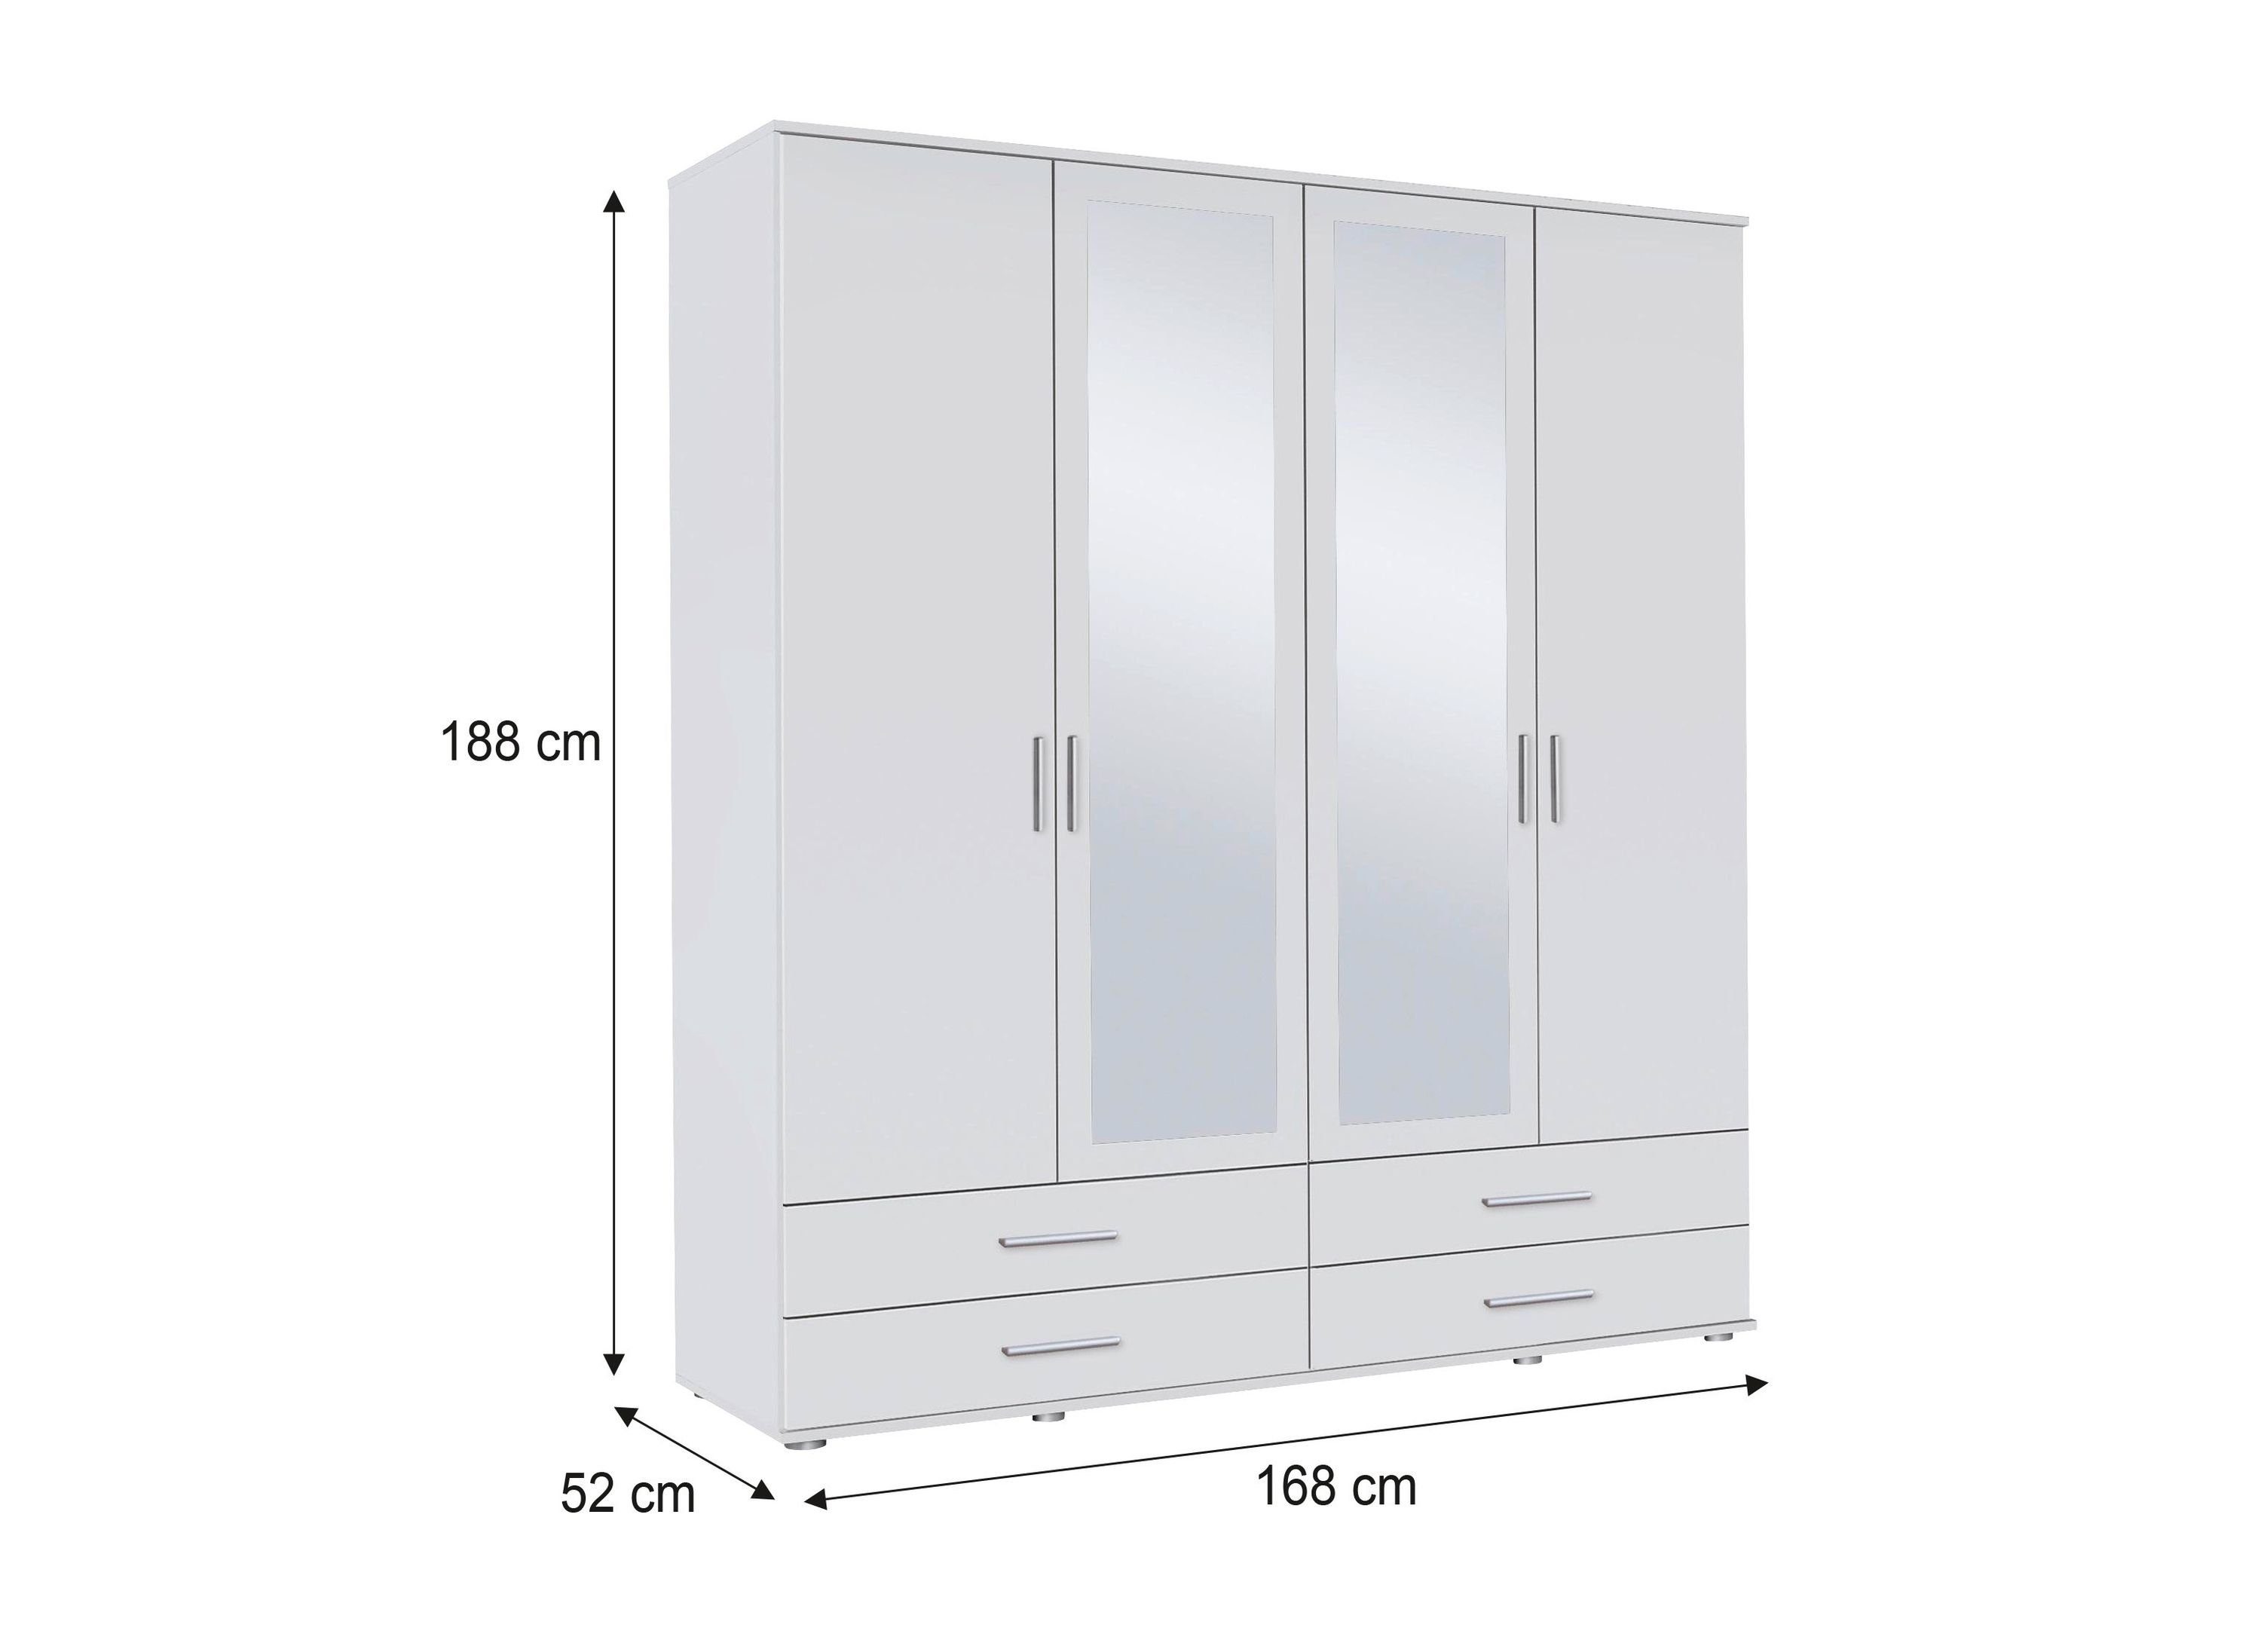 Türen 4 188 cm cm 168 weiß - H Kindermöbel Schranksystem Rasa 24 B